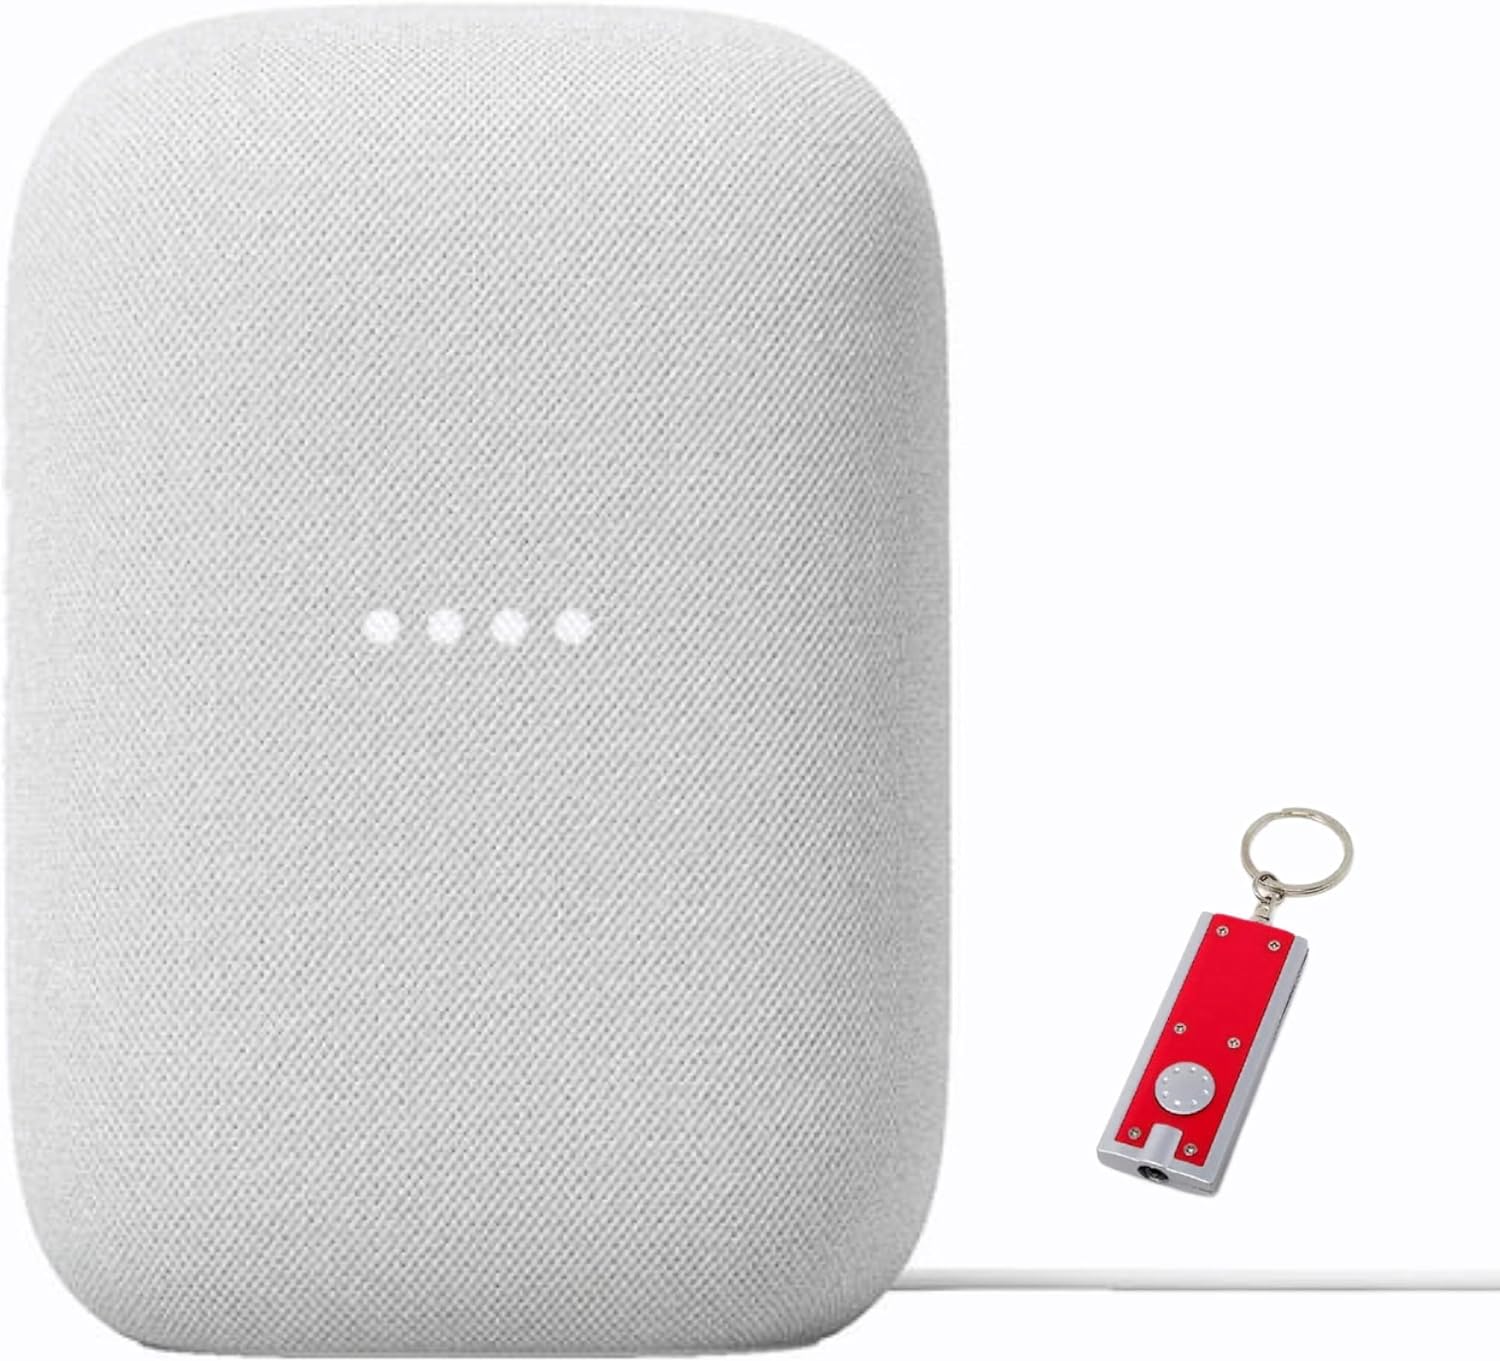 Google Audio Bluetooth Speaker with Keychain LED – Wireless Music Streaming – Chalk